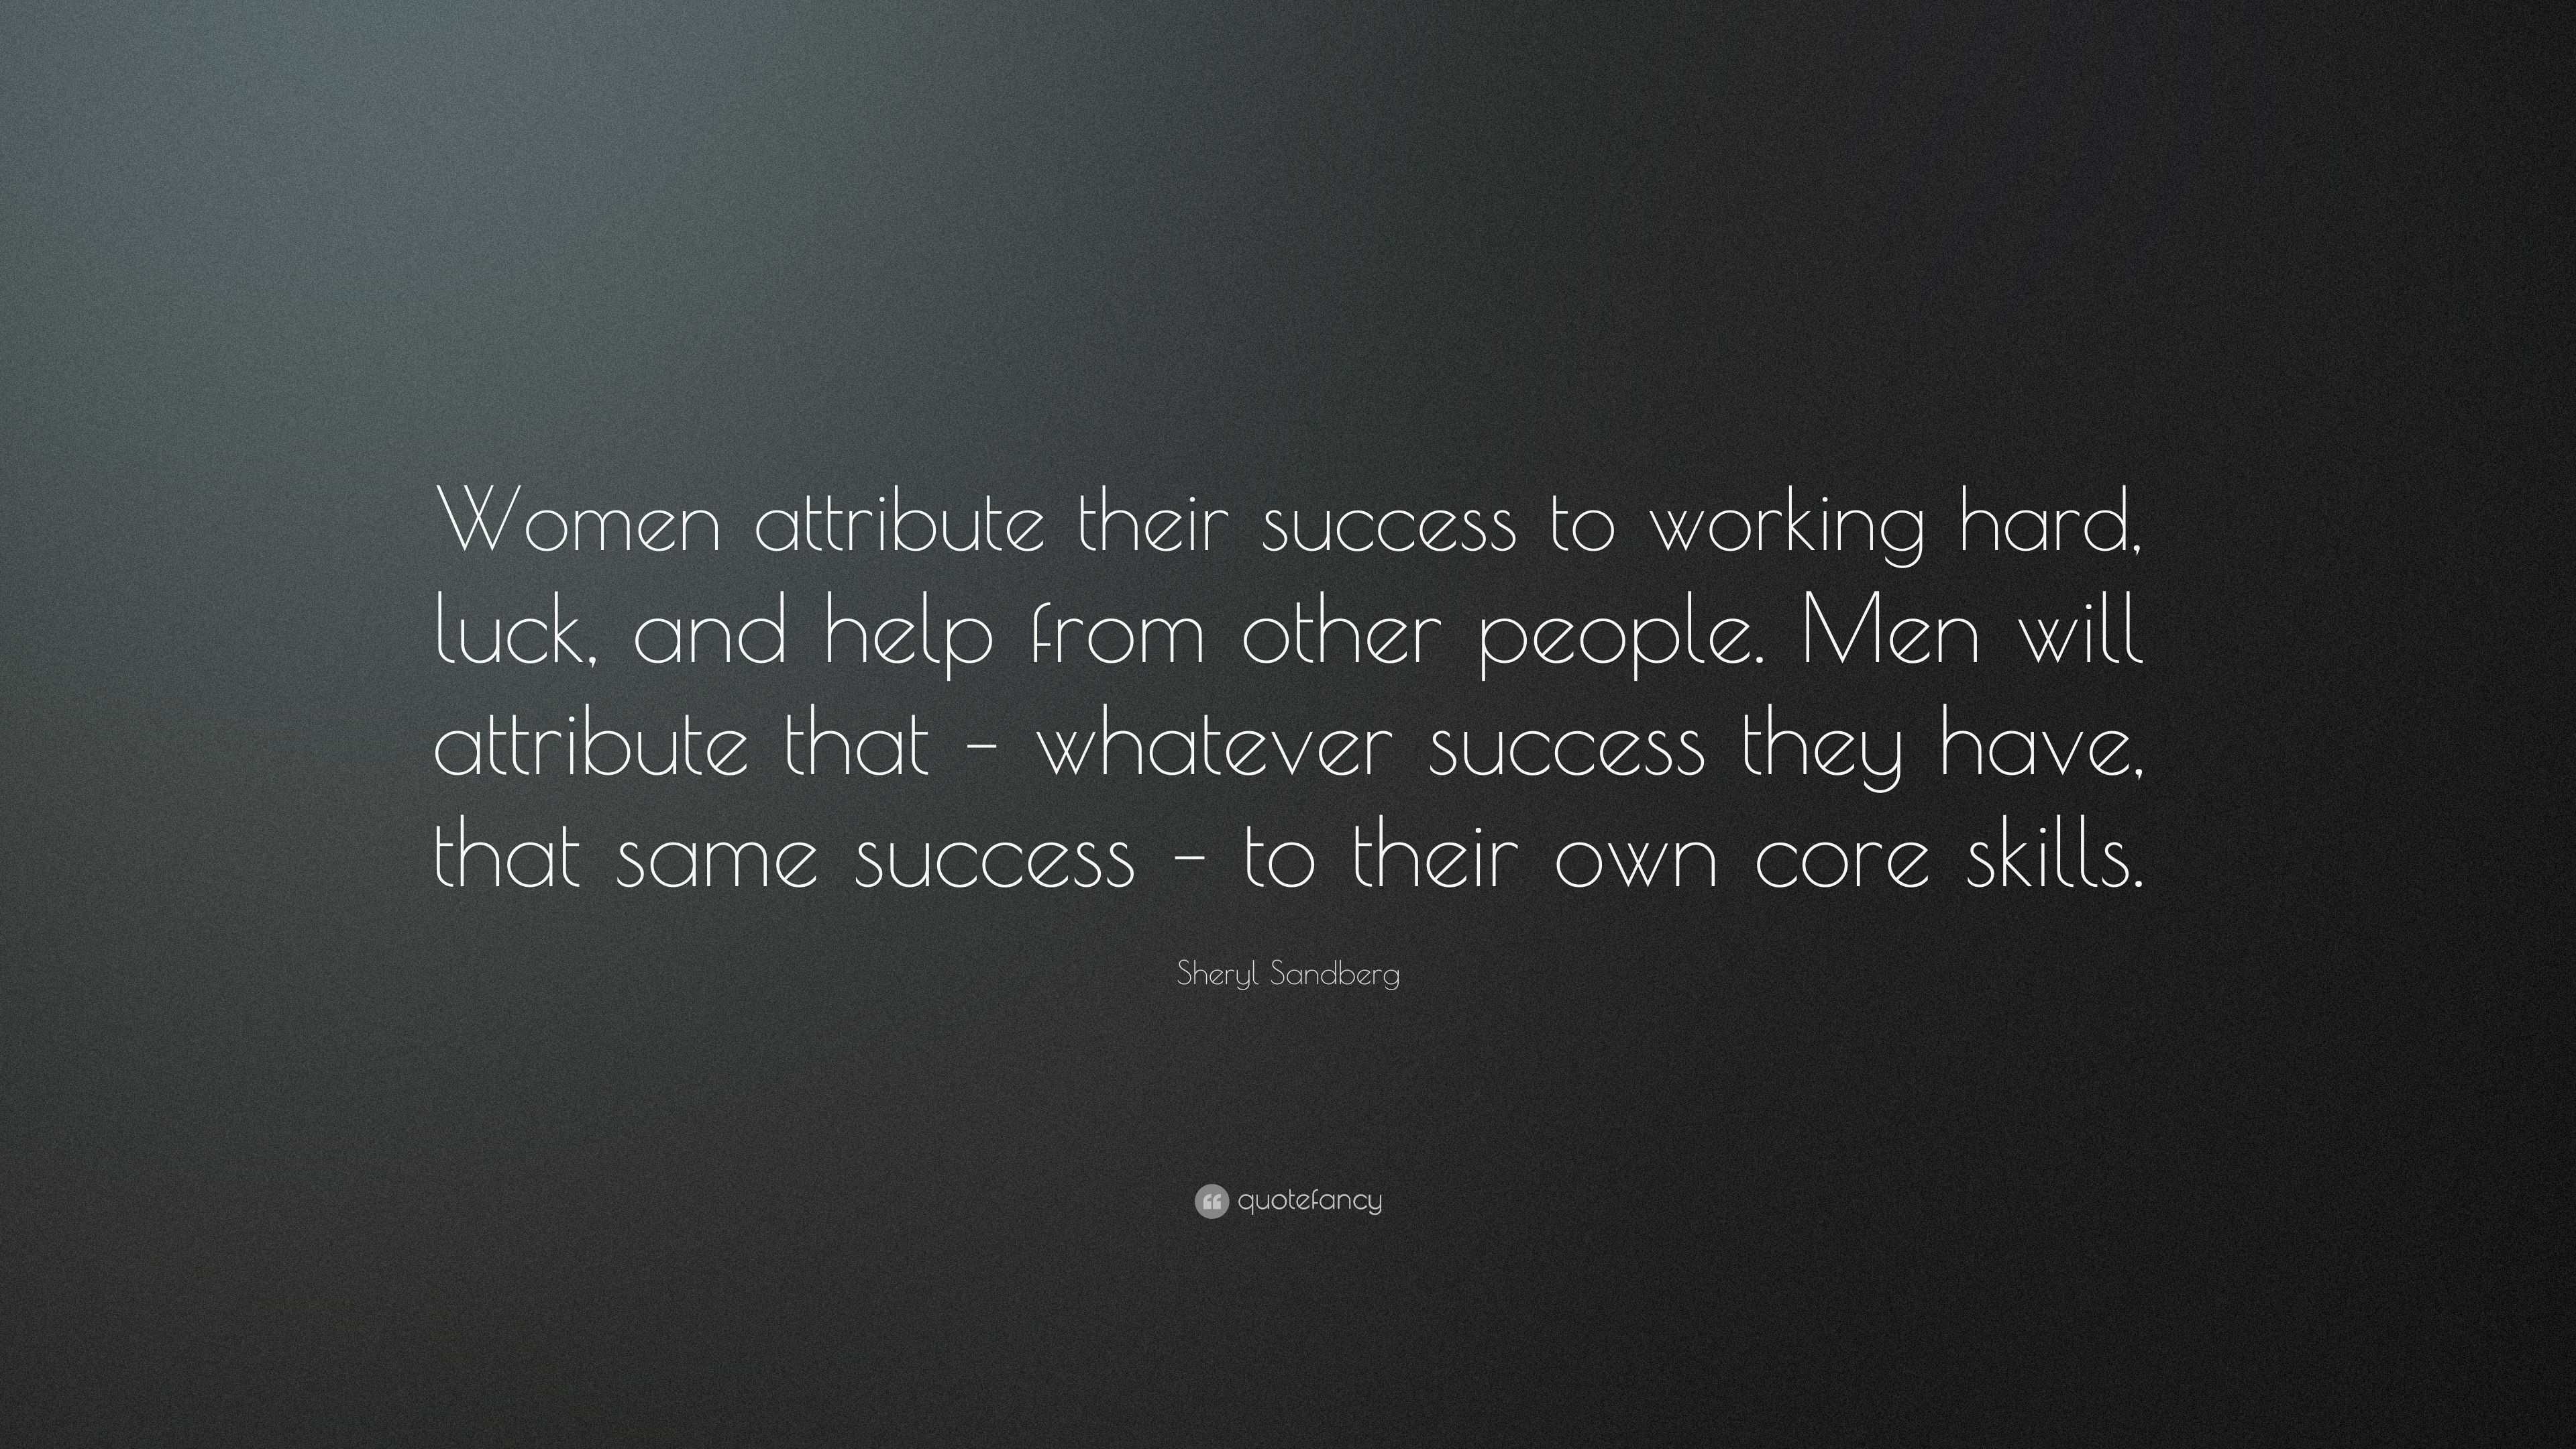 Sheryl Sandberg Quote: “Women attribute their success to working hard ...